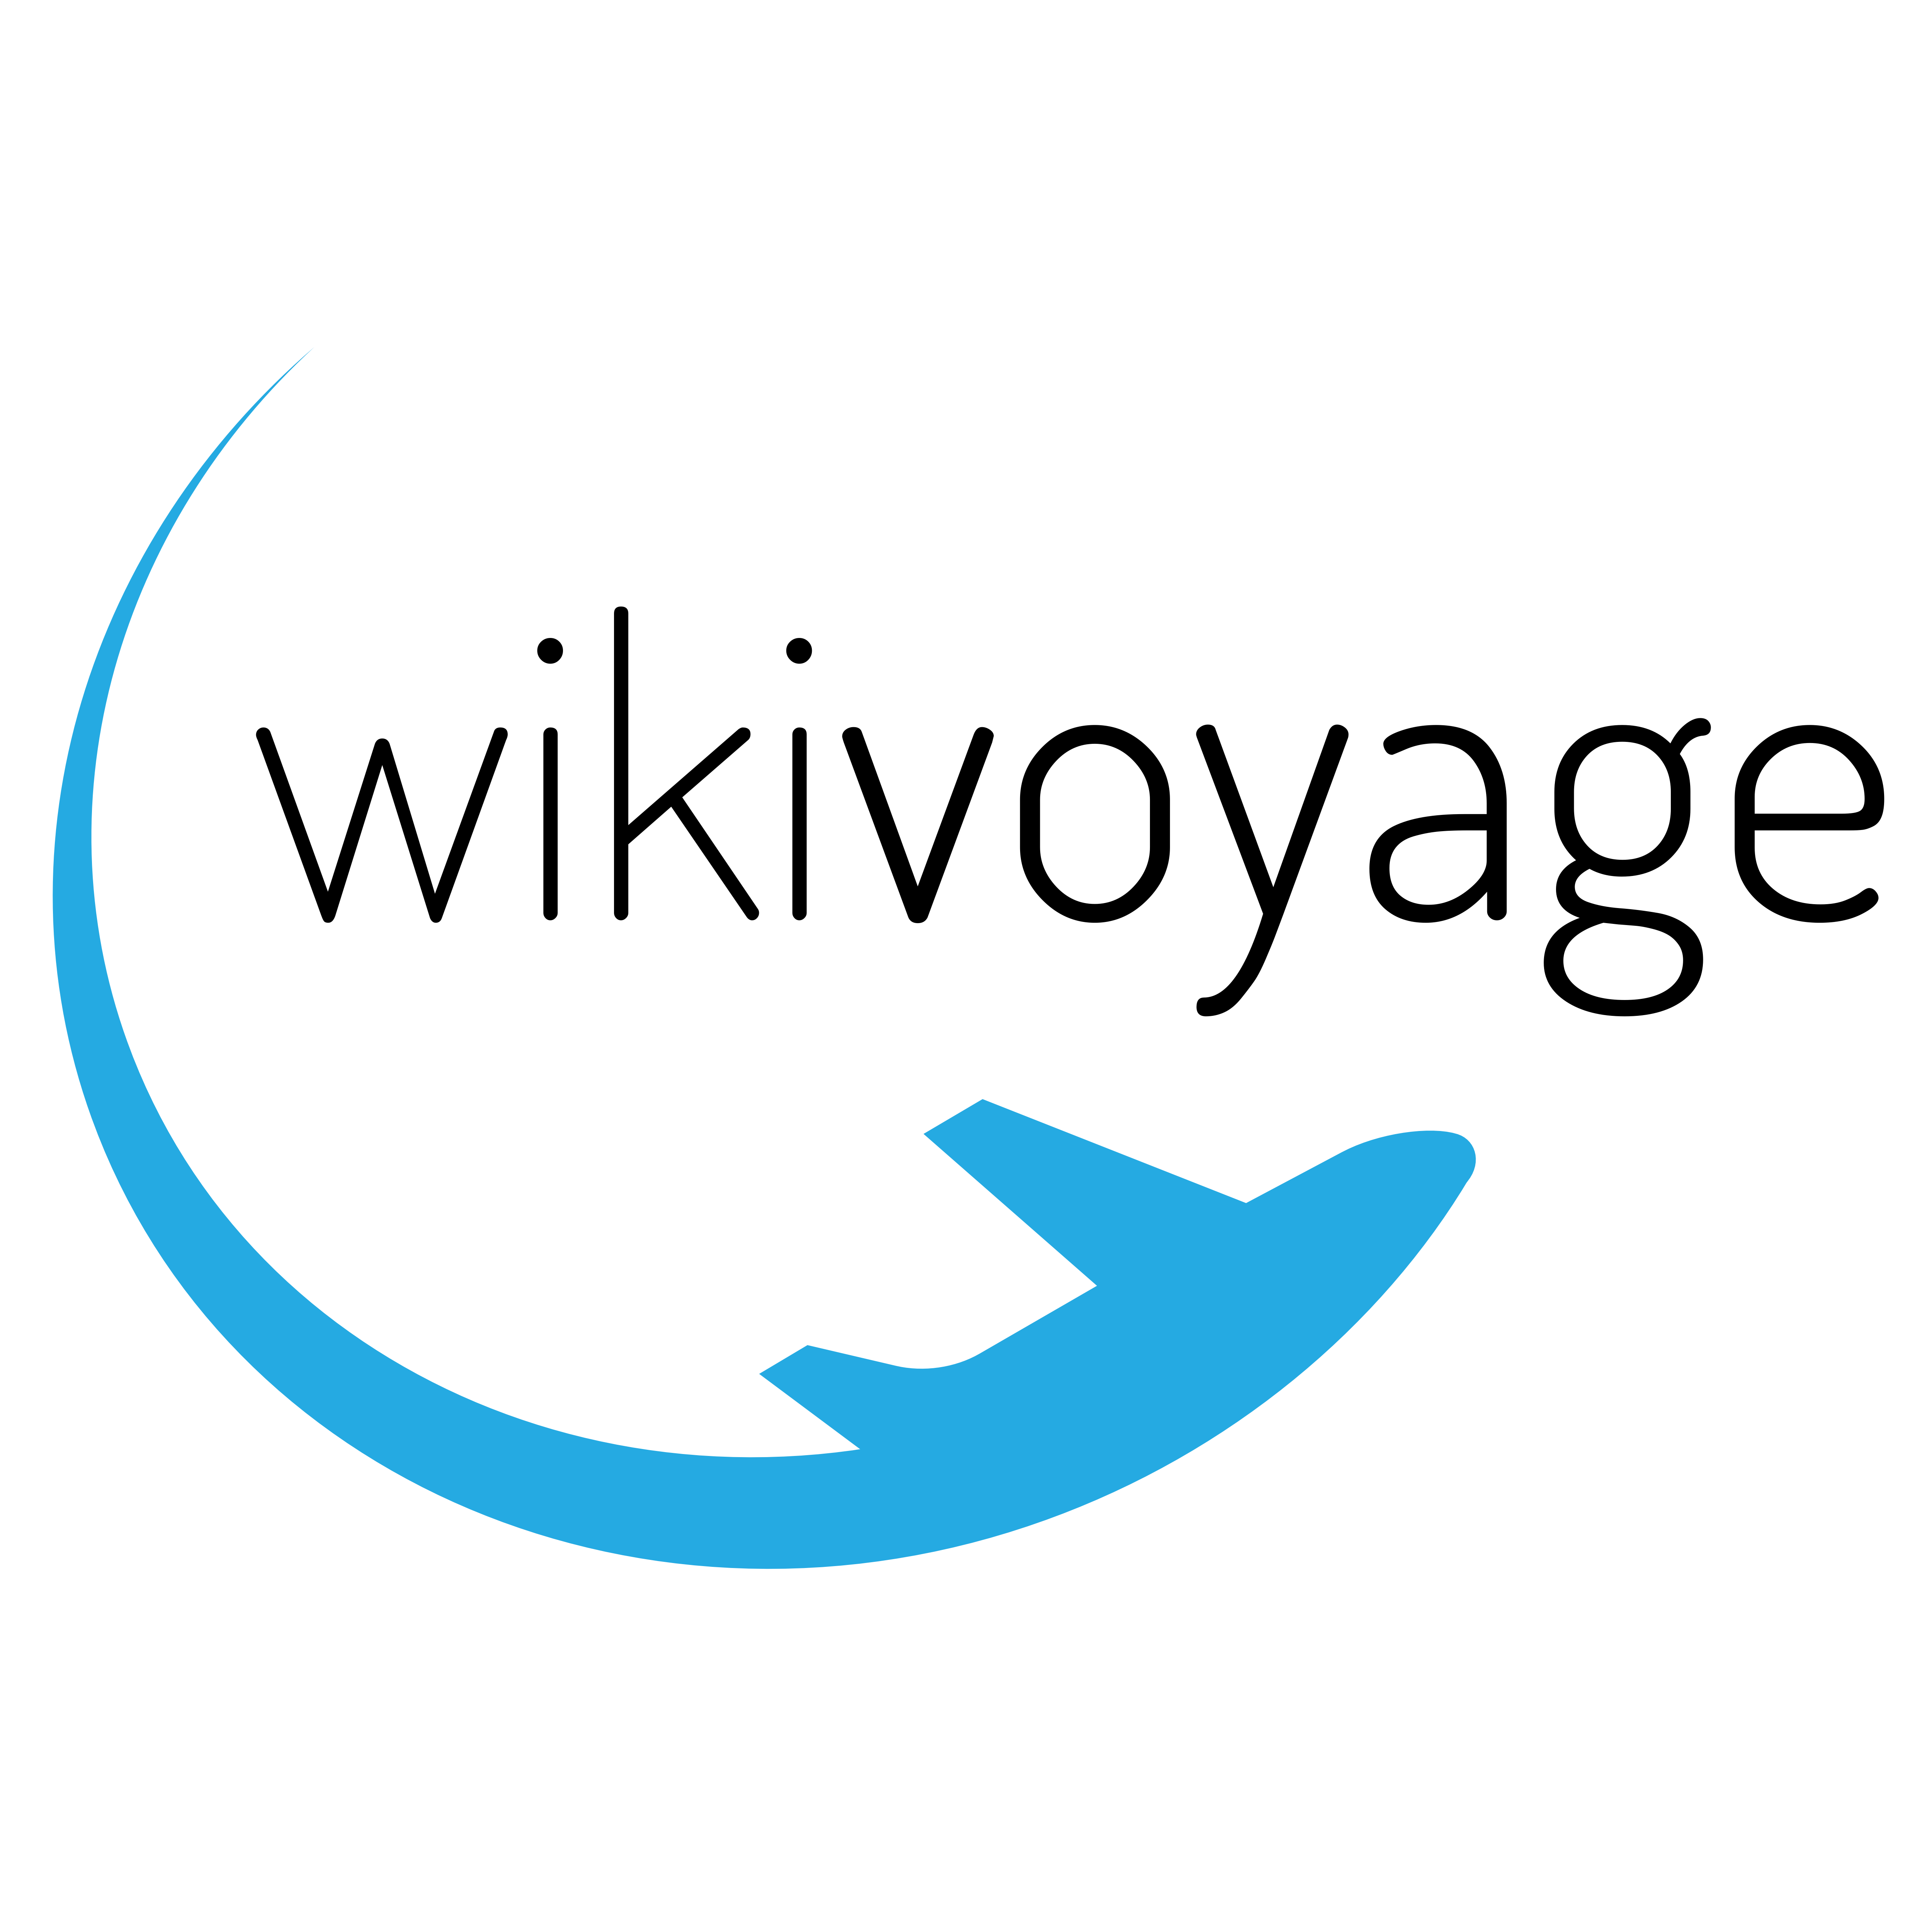 File:Wv logo proposal flying plane.png